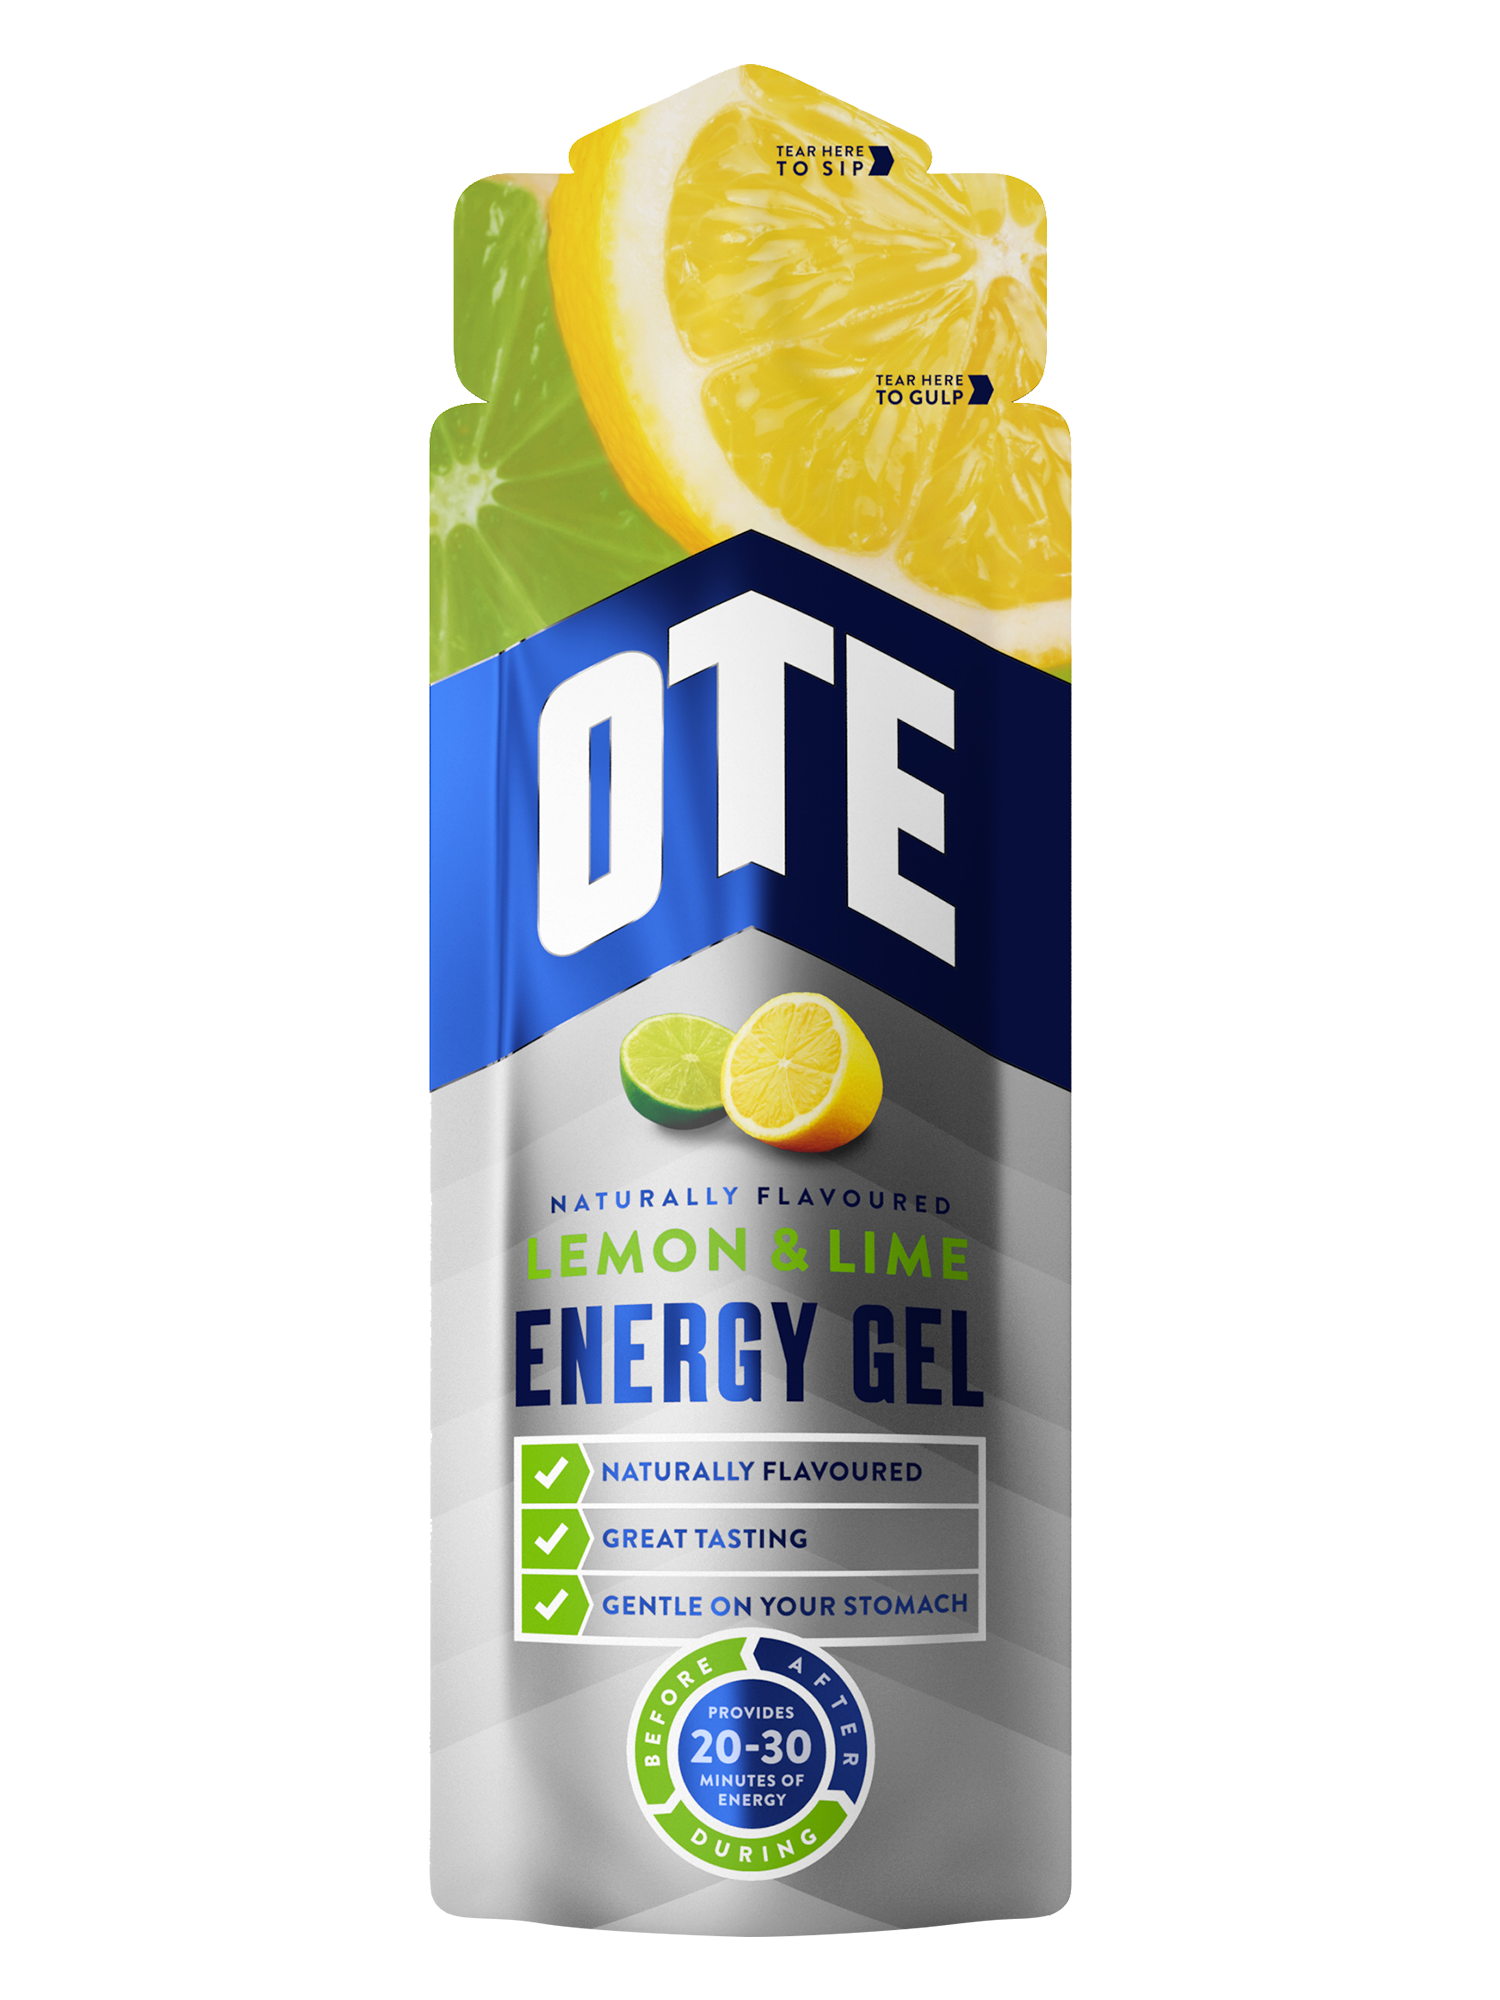 Lemon and Lime energy gel